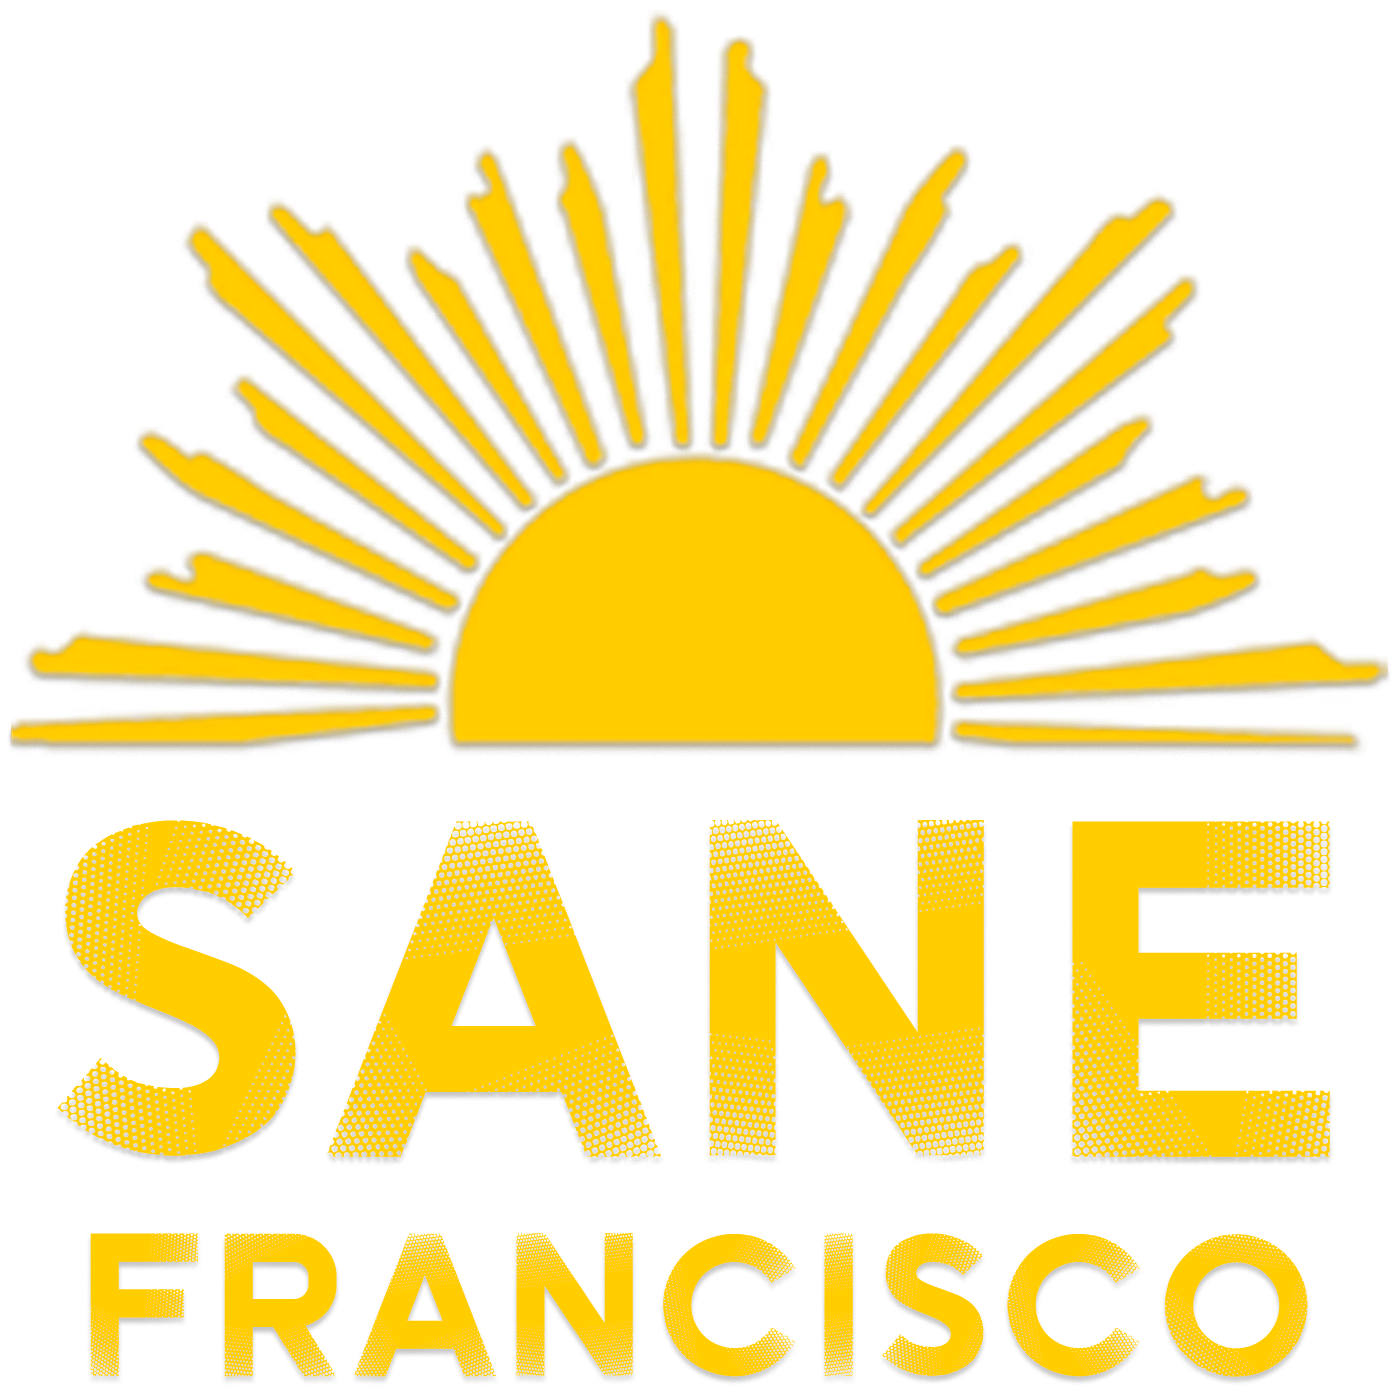 The Sane Francisco logo